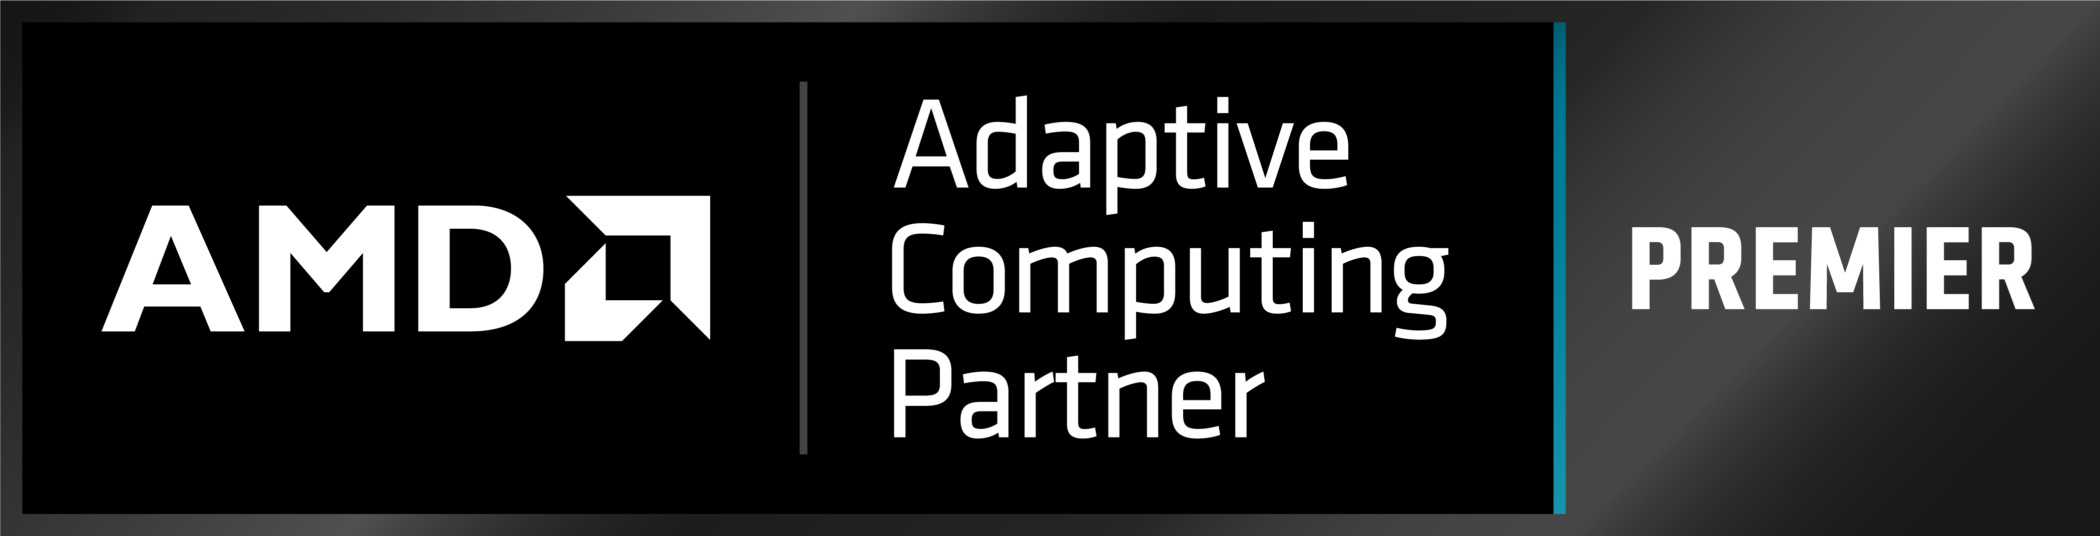 BLT AMD Premier Partner